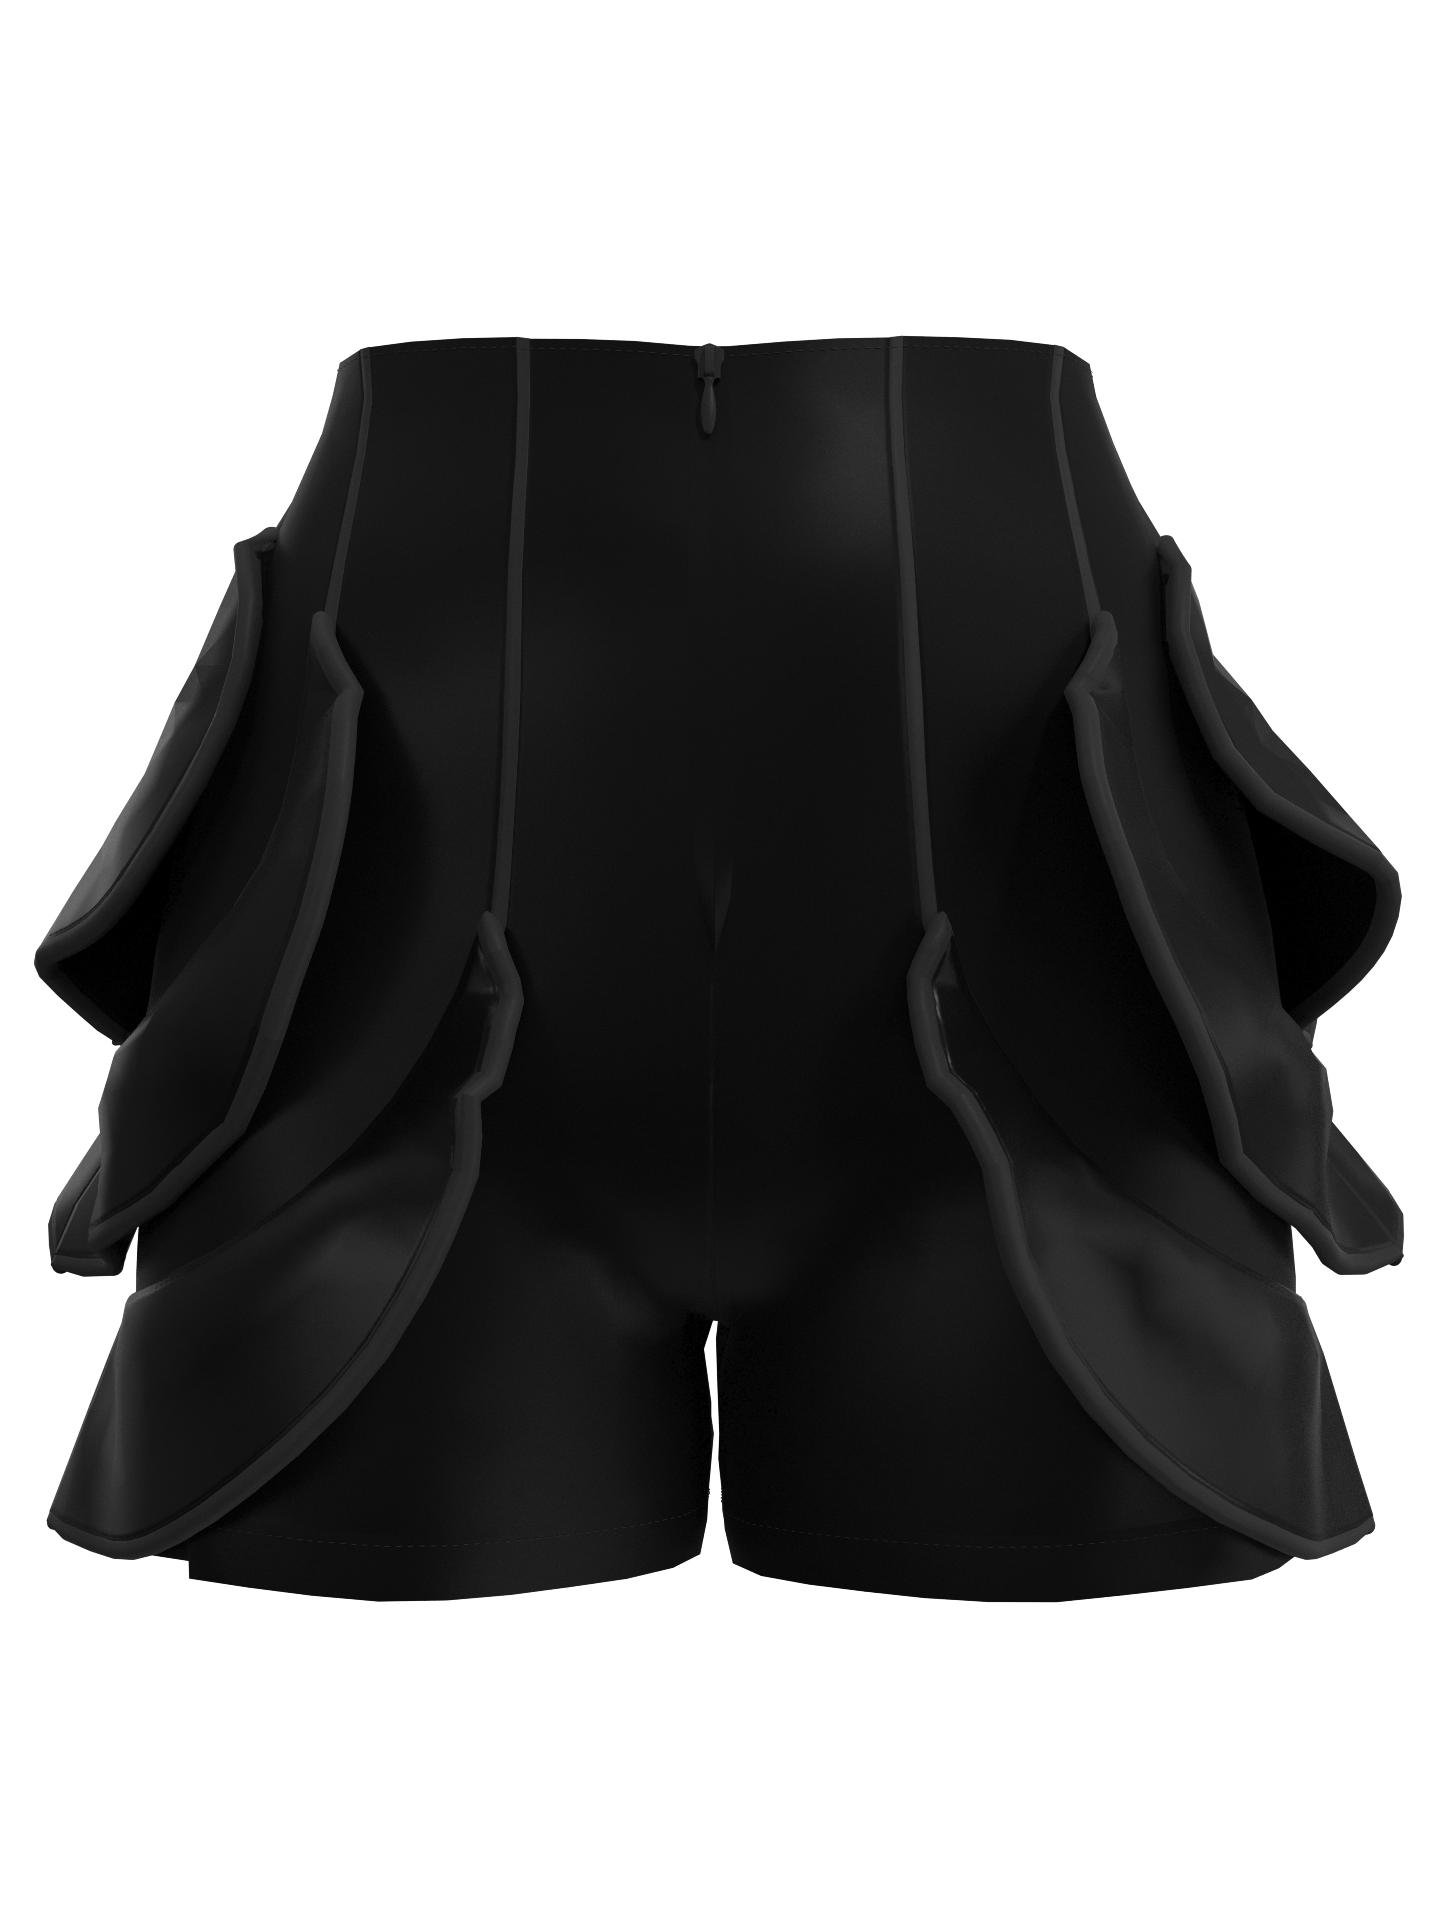 Burgeon Shorts Black by GABBY ONDREJECH